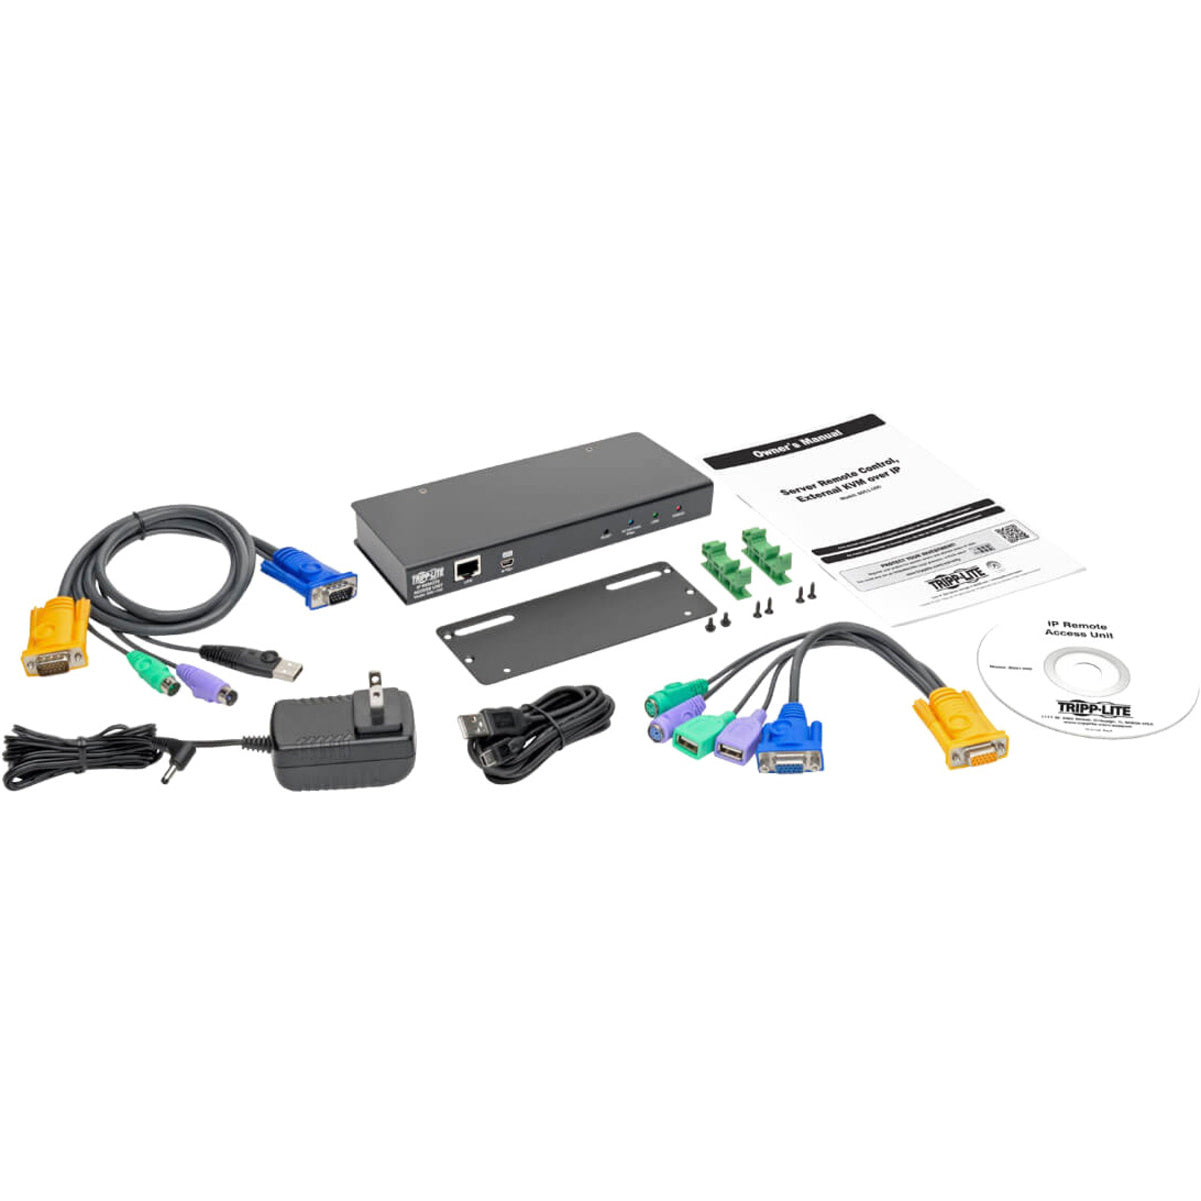 Tripp Lite B051-000 IP Remote Access KVM Switch USB/Serial Port 3-Jahres-Garantie TAA-konform